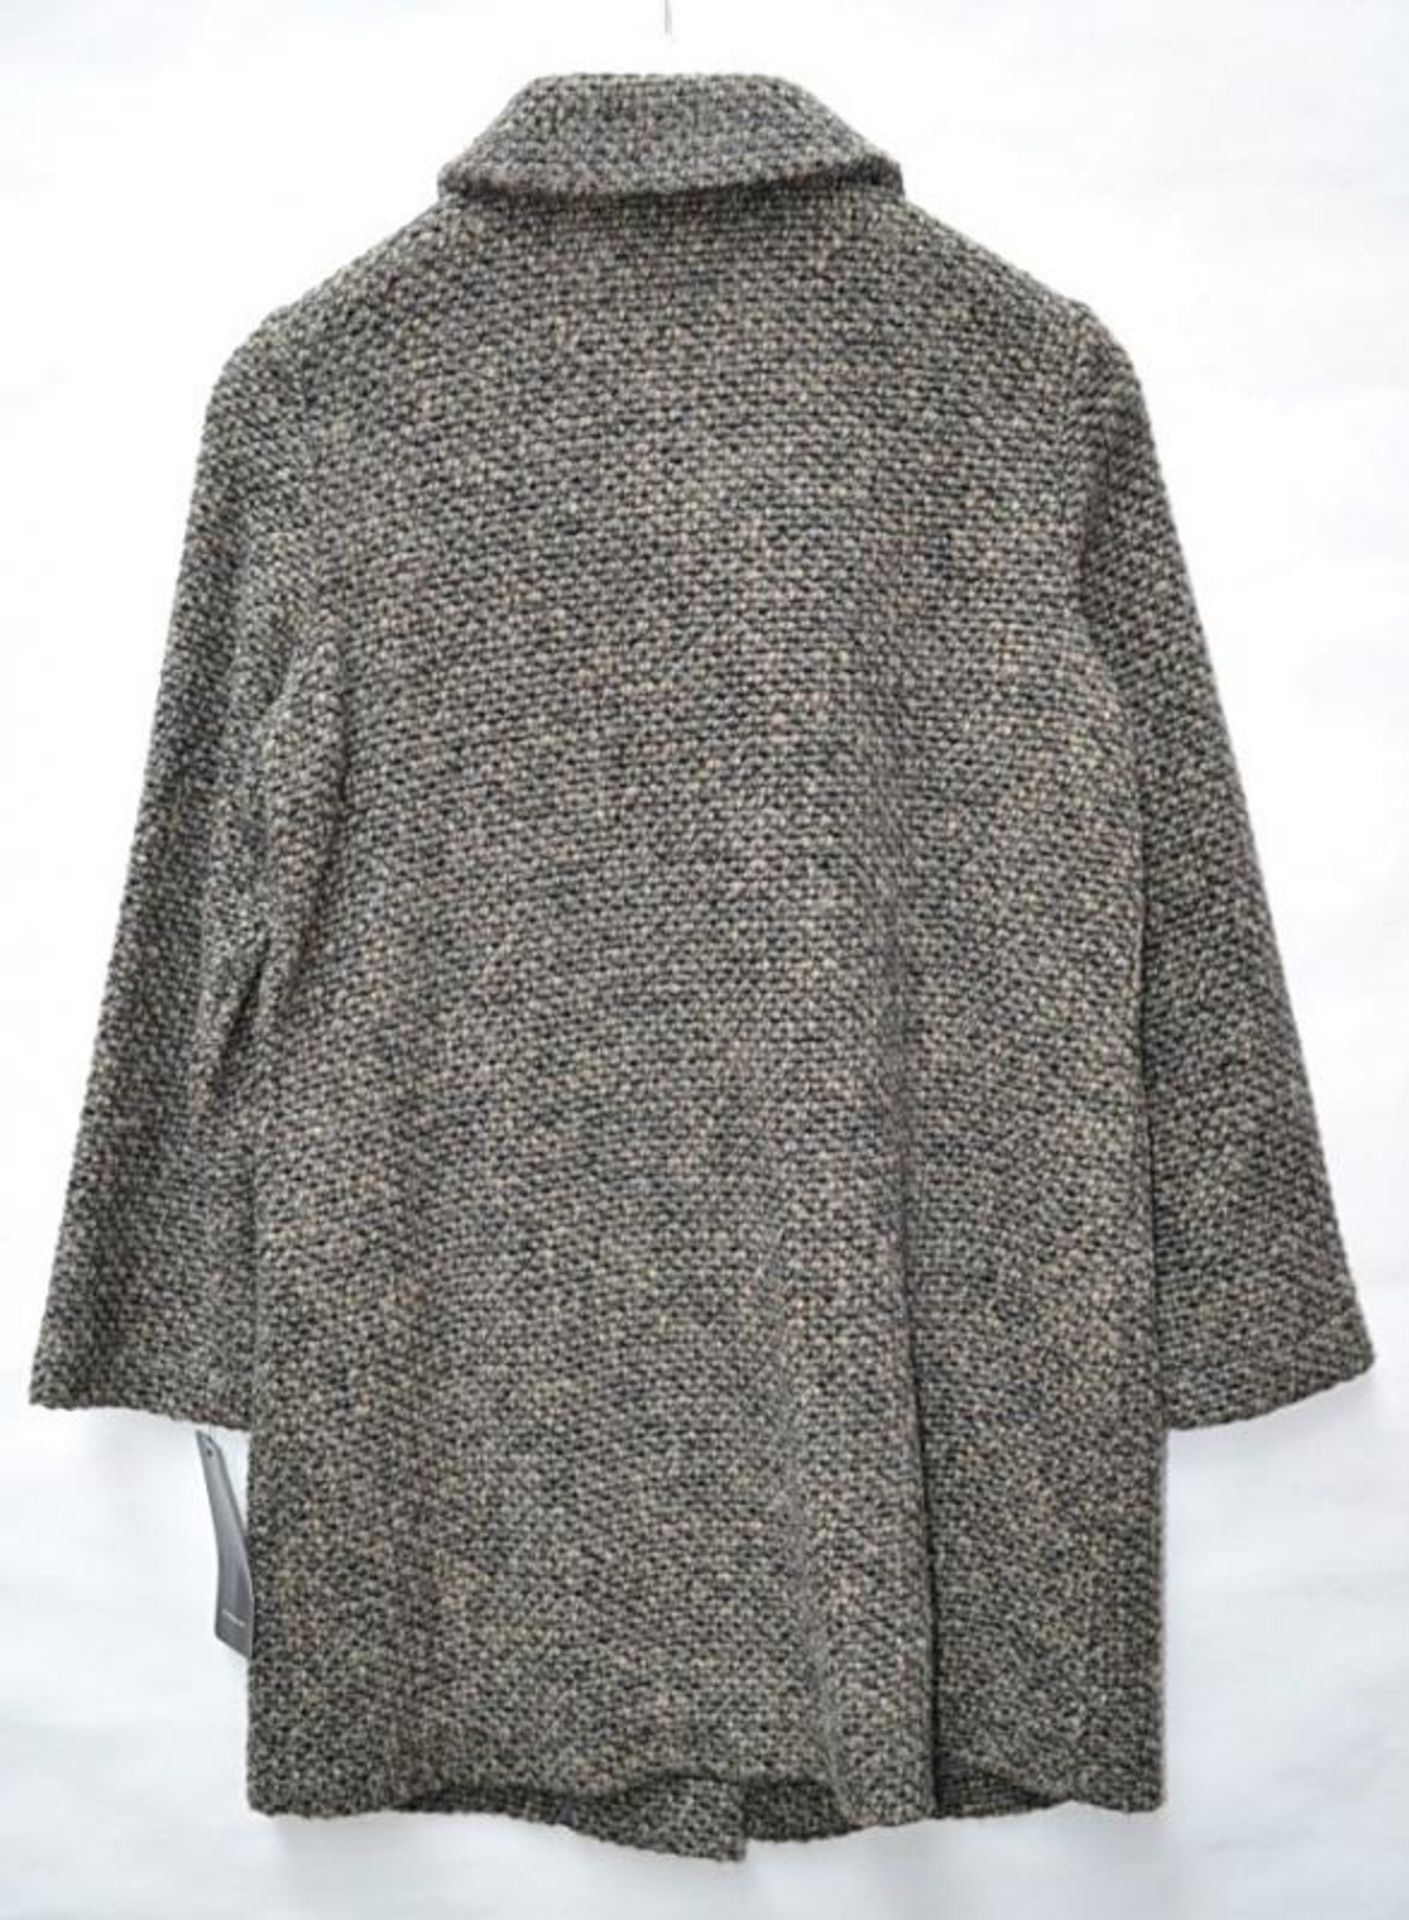 1 x Steilmann Womens Knitted Wool Blend Winter Coat - 87cm Long - Colour: Camel & Metallic Grey - UK - Image 2 of 4